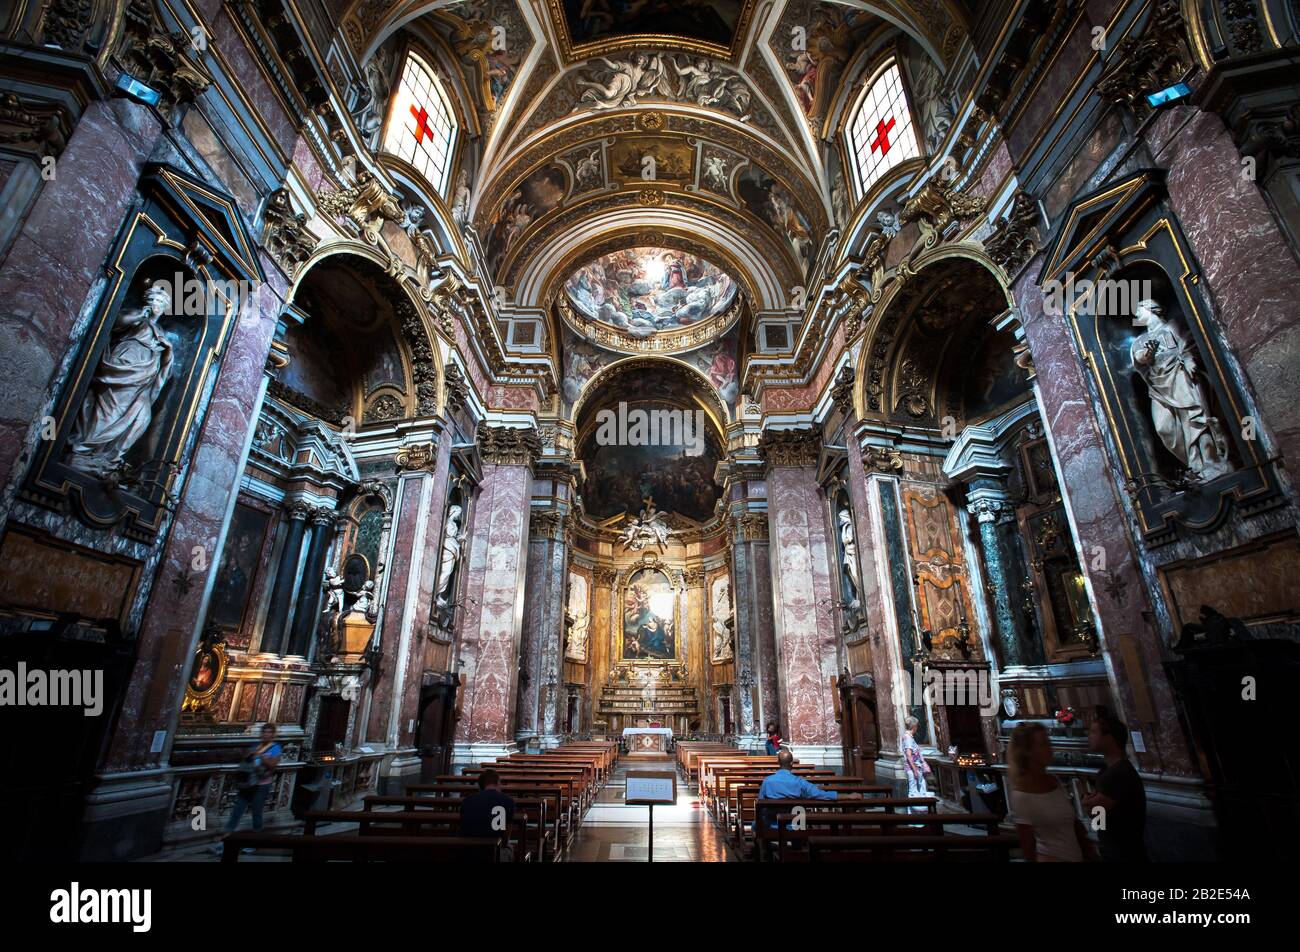 Interior of the church of Santa Maria Maddalena, Rome. The church is named after Saint Mary Magdalene. Stock Photo